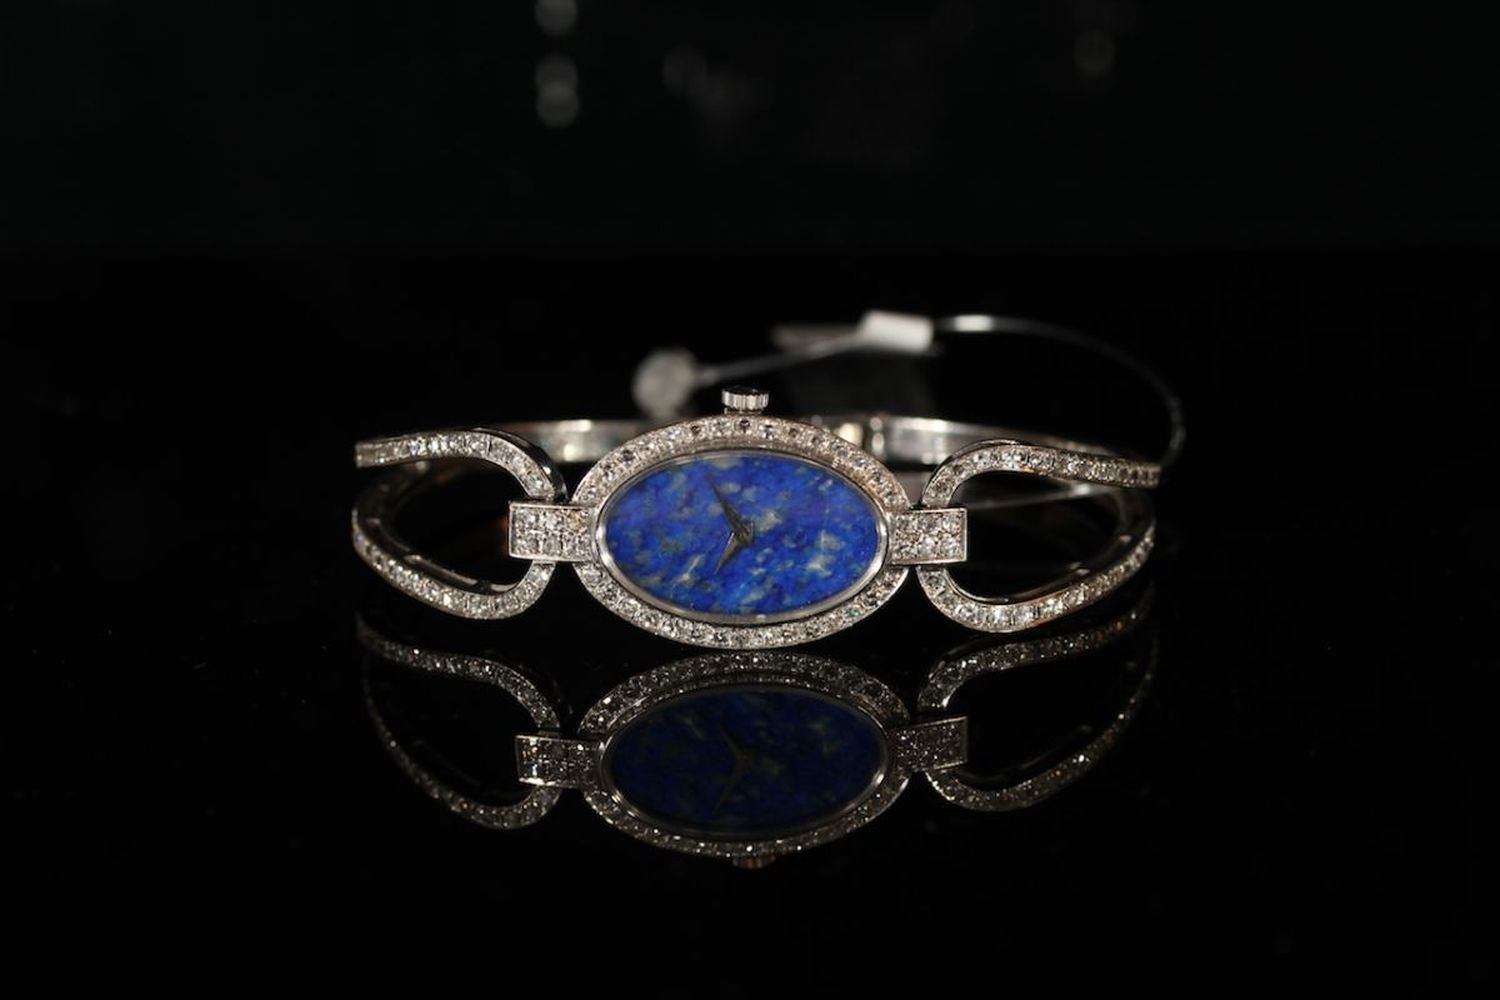 LADIES DIAMOND SET CHOPARD WRISTWATCH 17128 5026 1, oval blue stone dial, 18mm x 25mm case, quartz